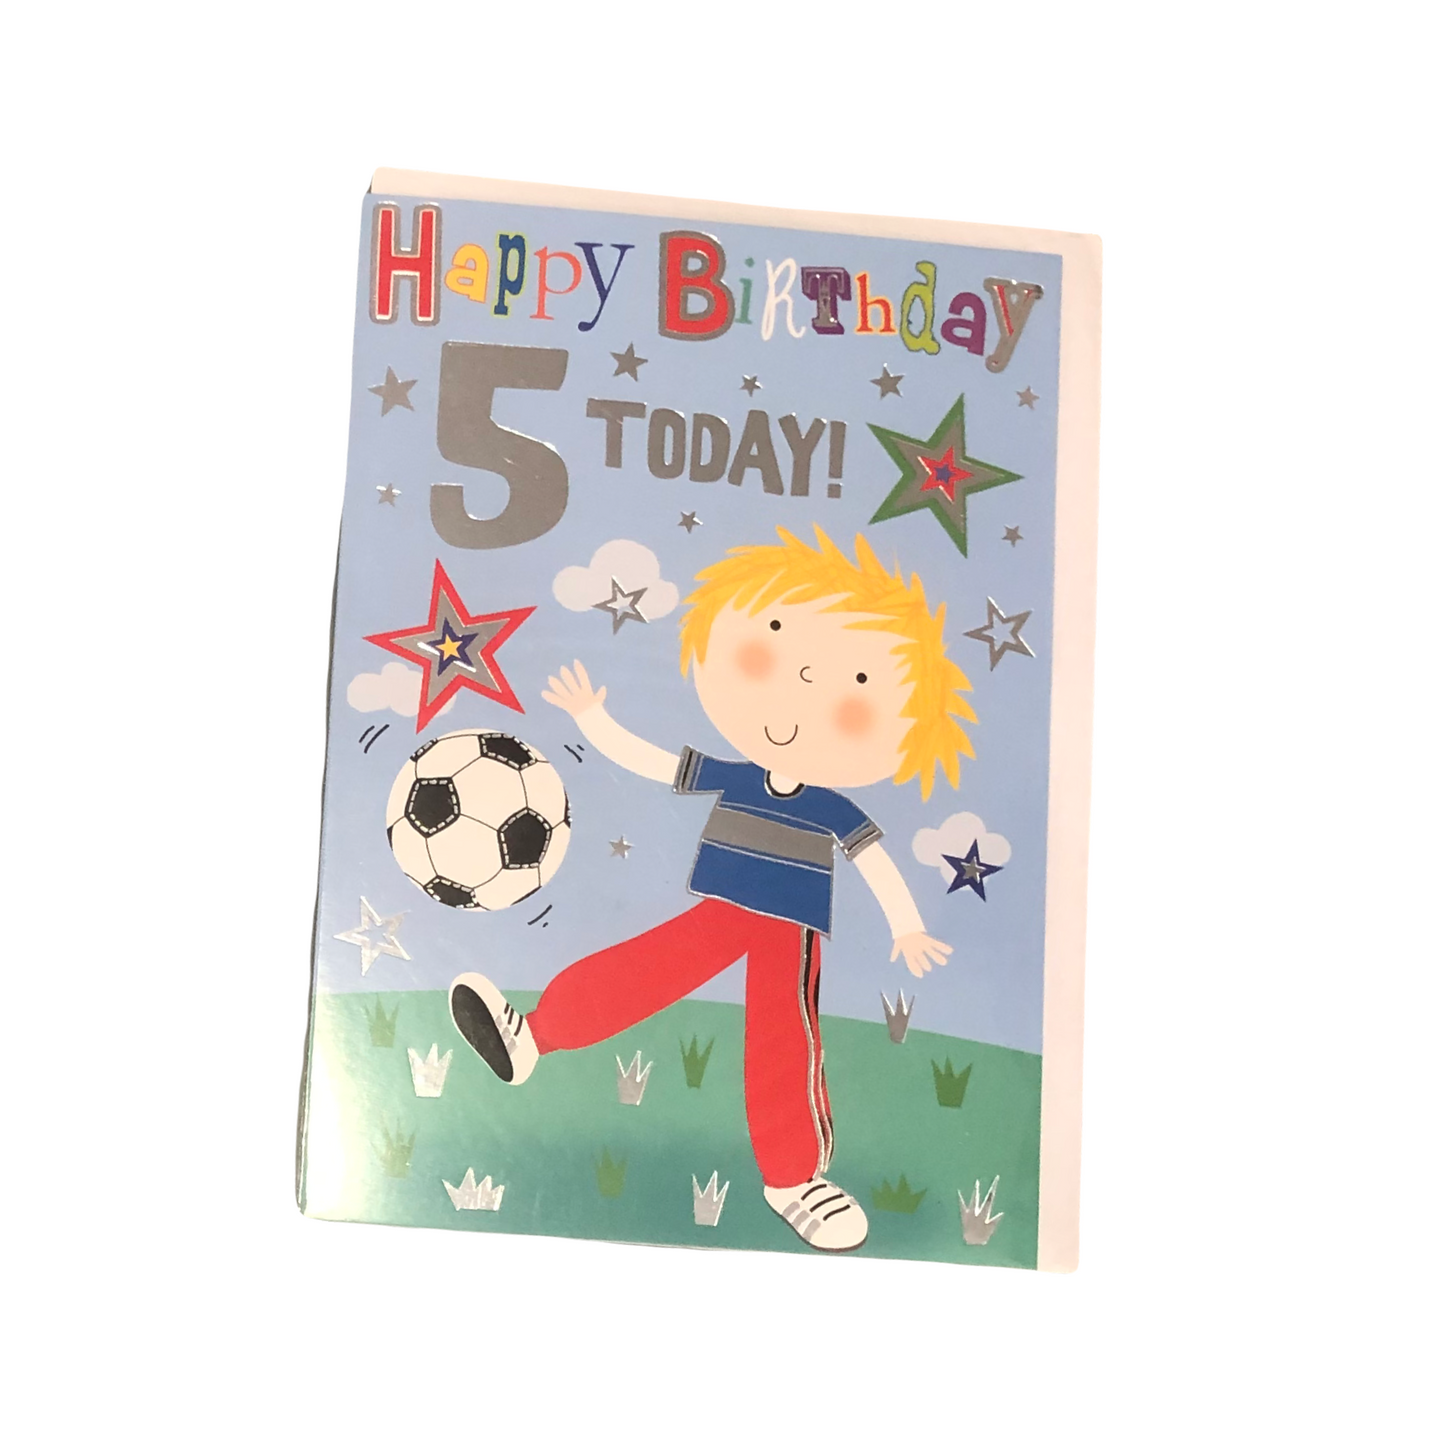 Happy Birthday 5 Today Card